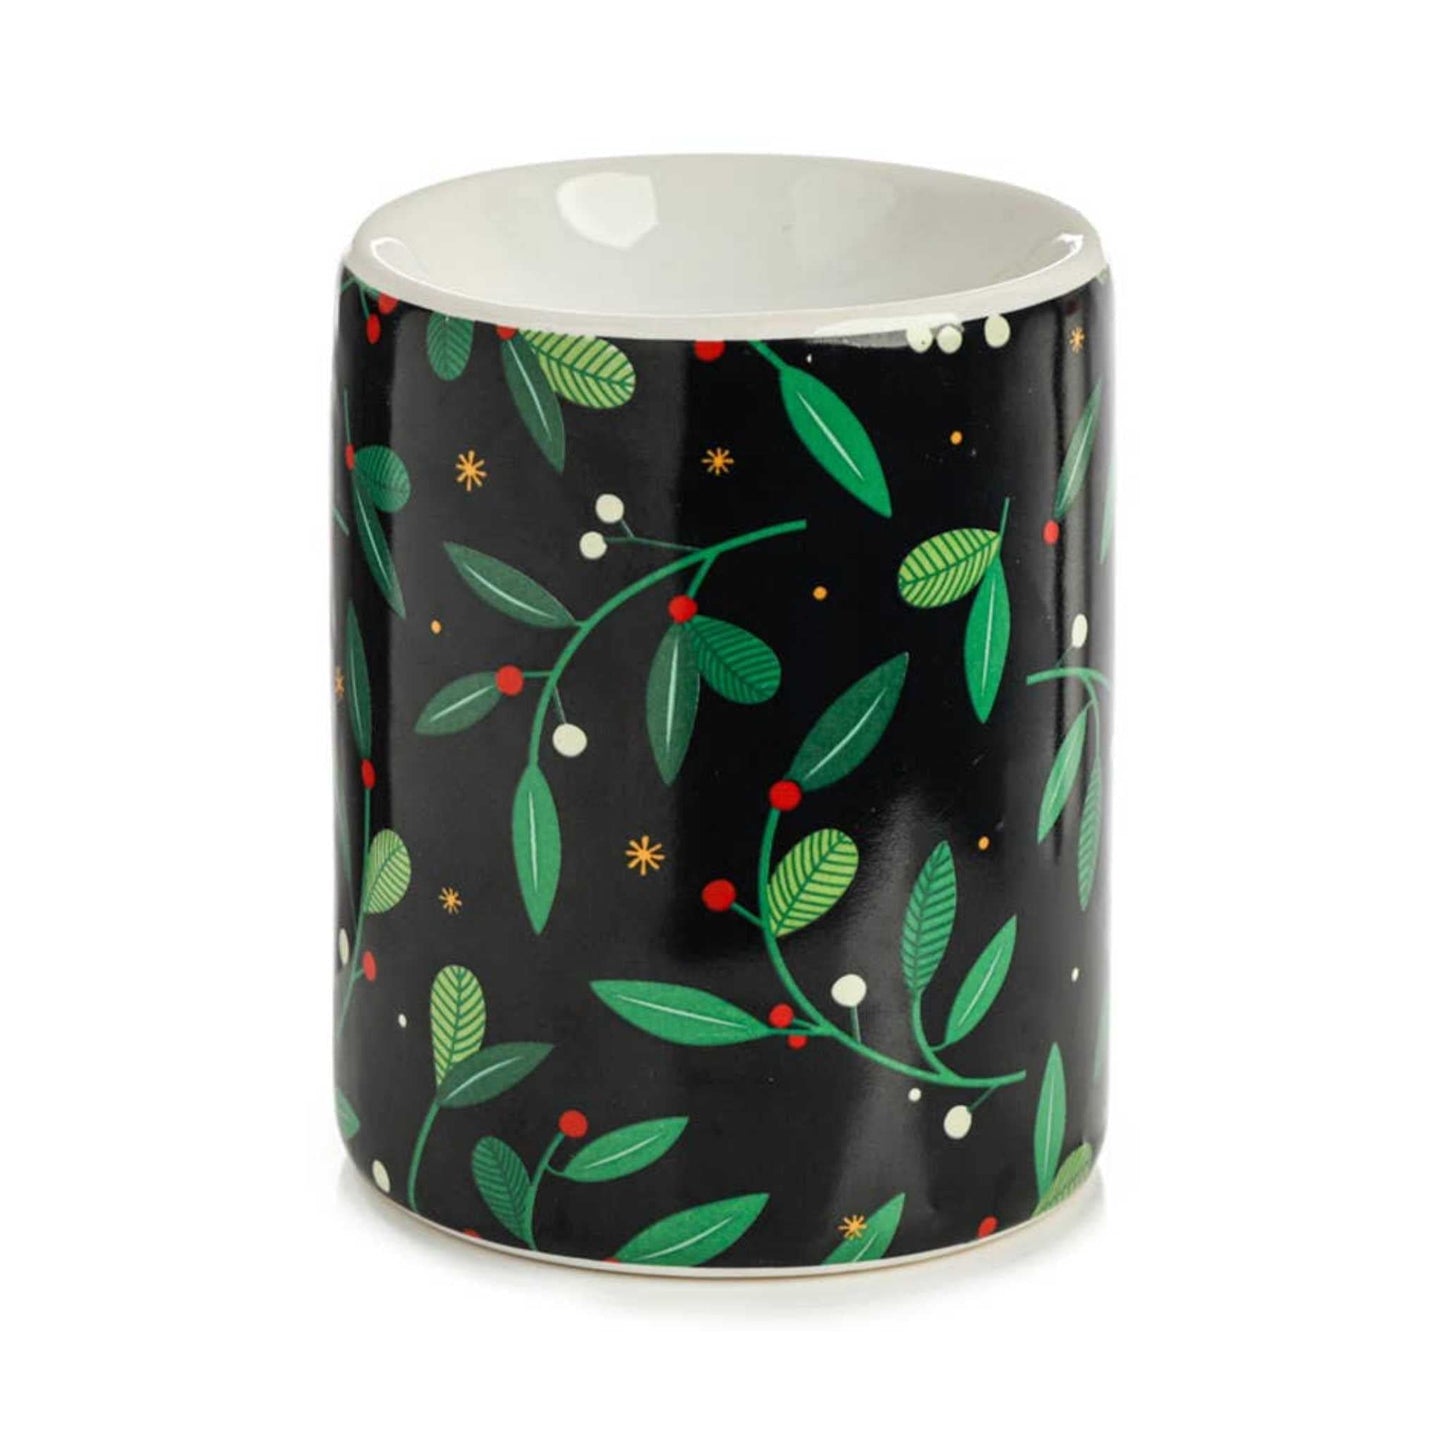 Puckator Home Fragrance Accessories Mistletoe & Winter Christmas Printed Ceramic Oil Burner